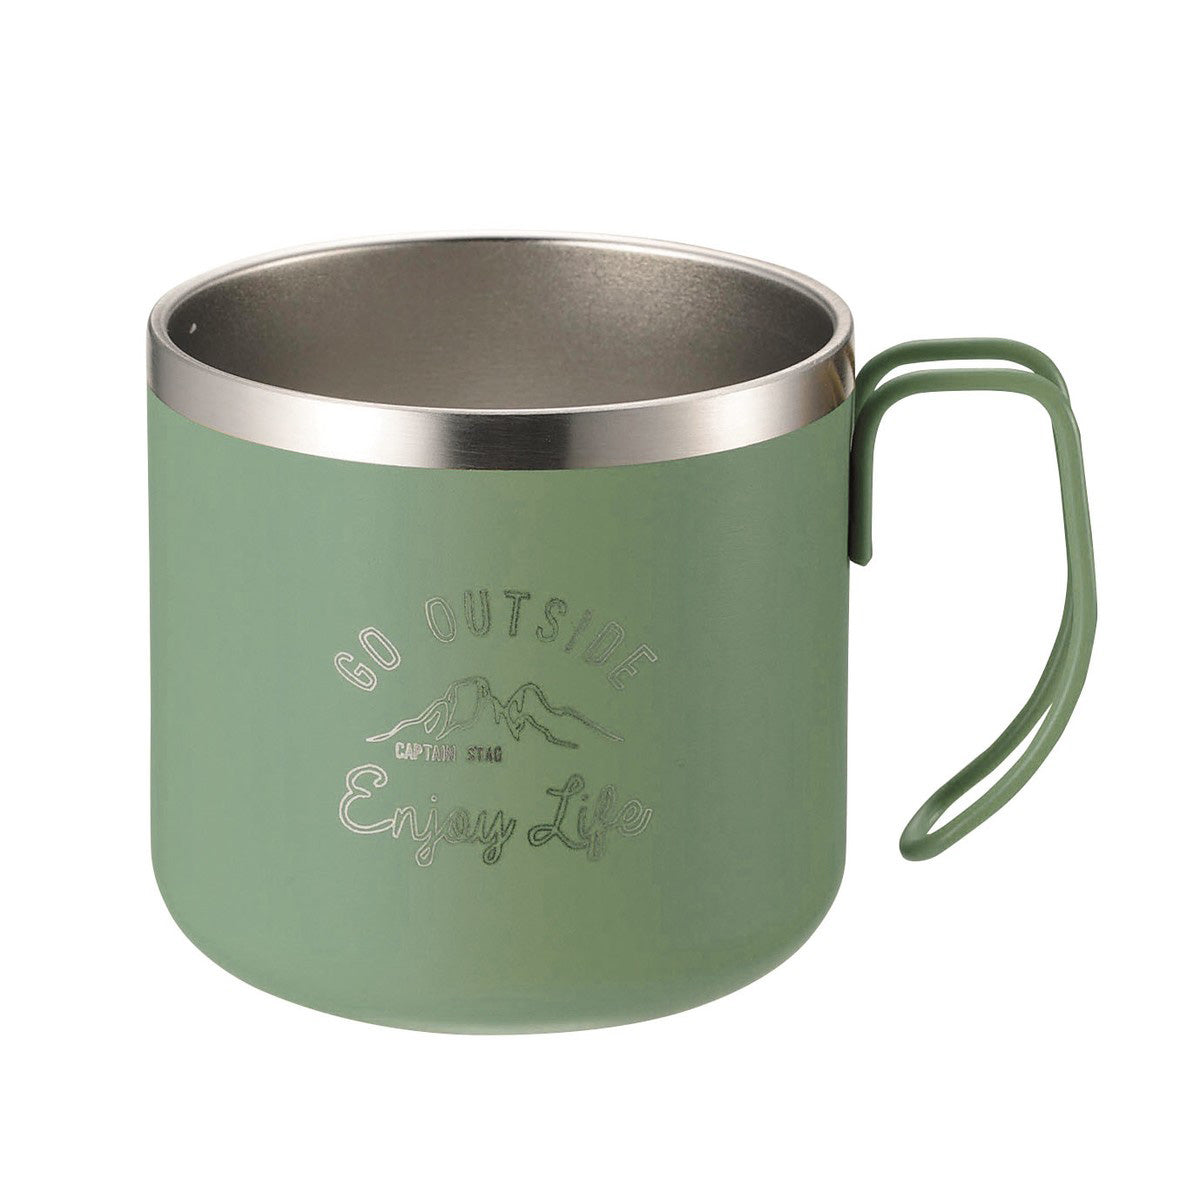 Captain Stag Stainless Steel Mug 350ml (Vintage Green) 不鏽鋼保溫杯 UE-3556